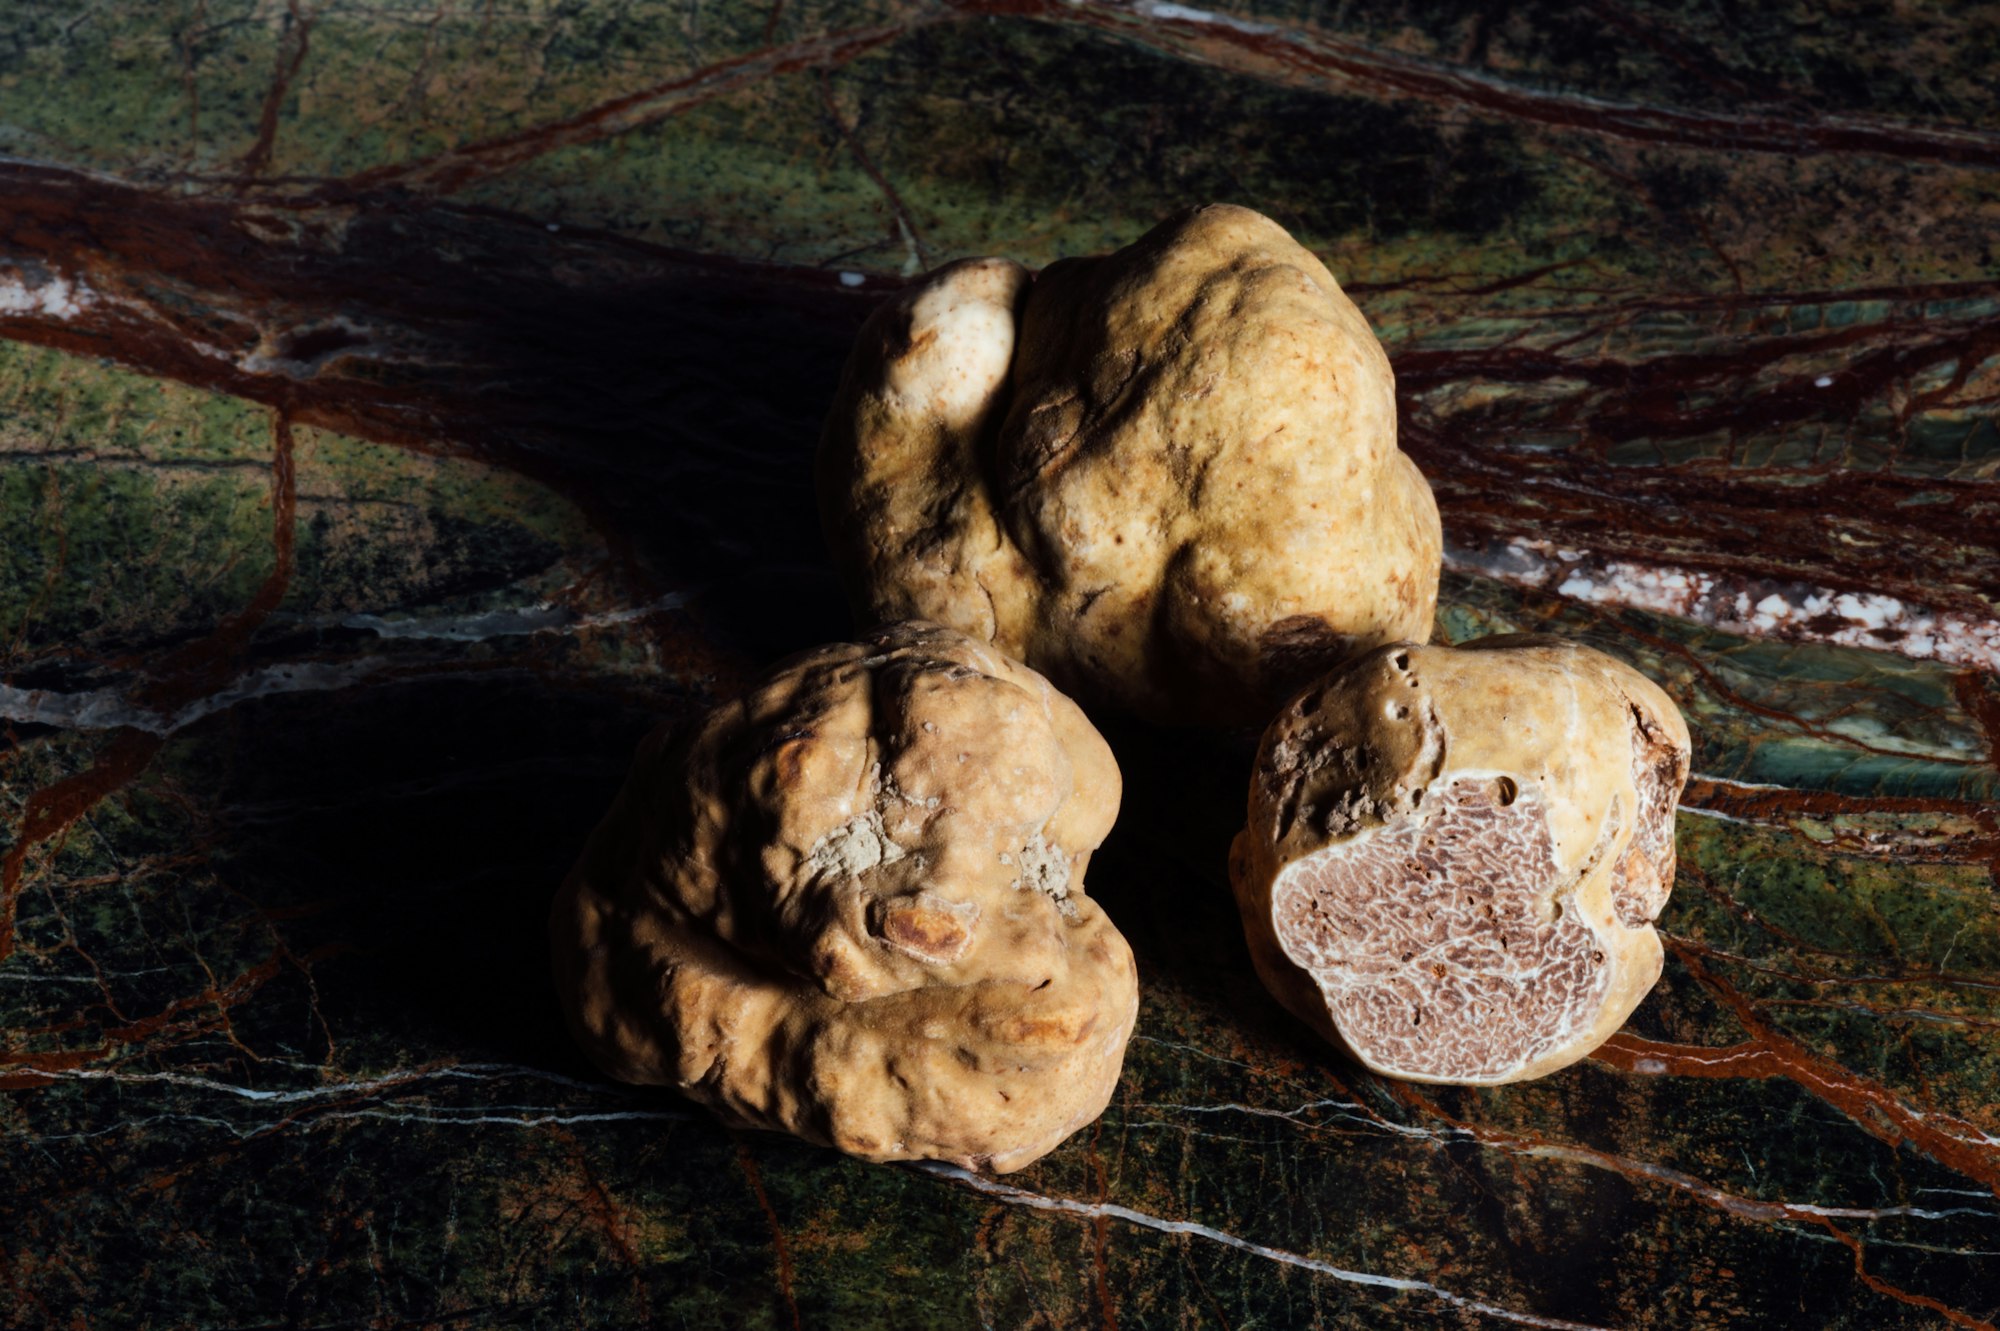 Alba white truffles 
from Chef Mirko Febbrile